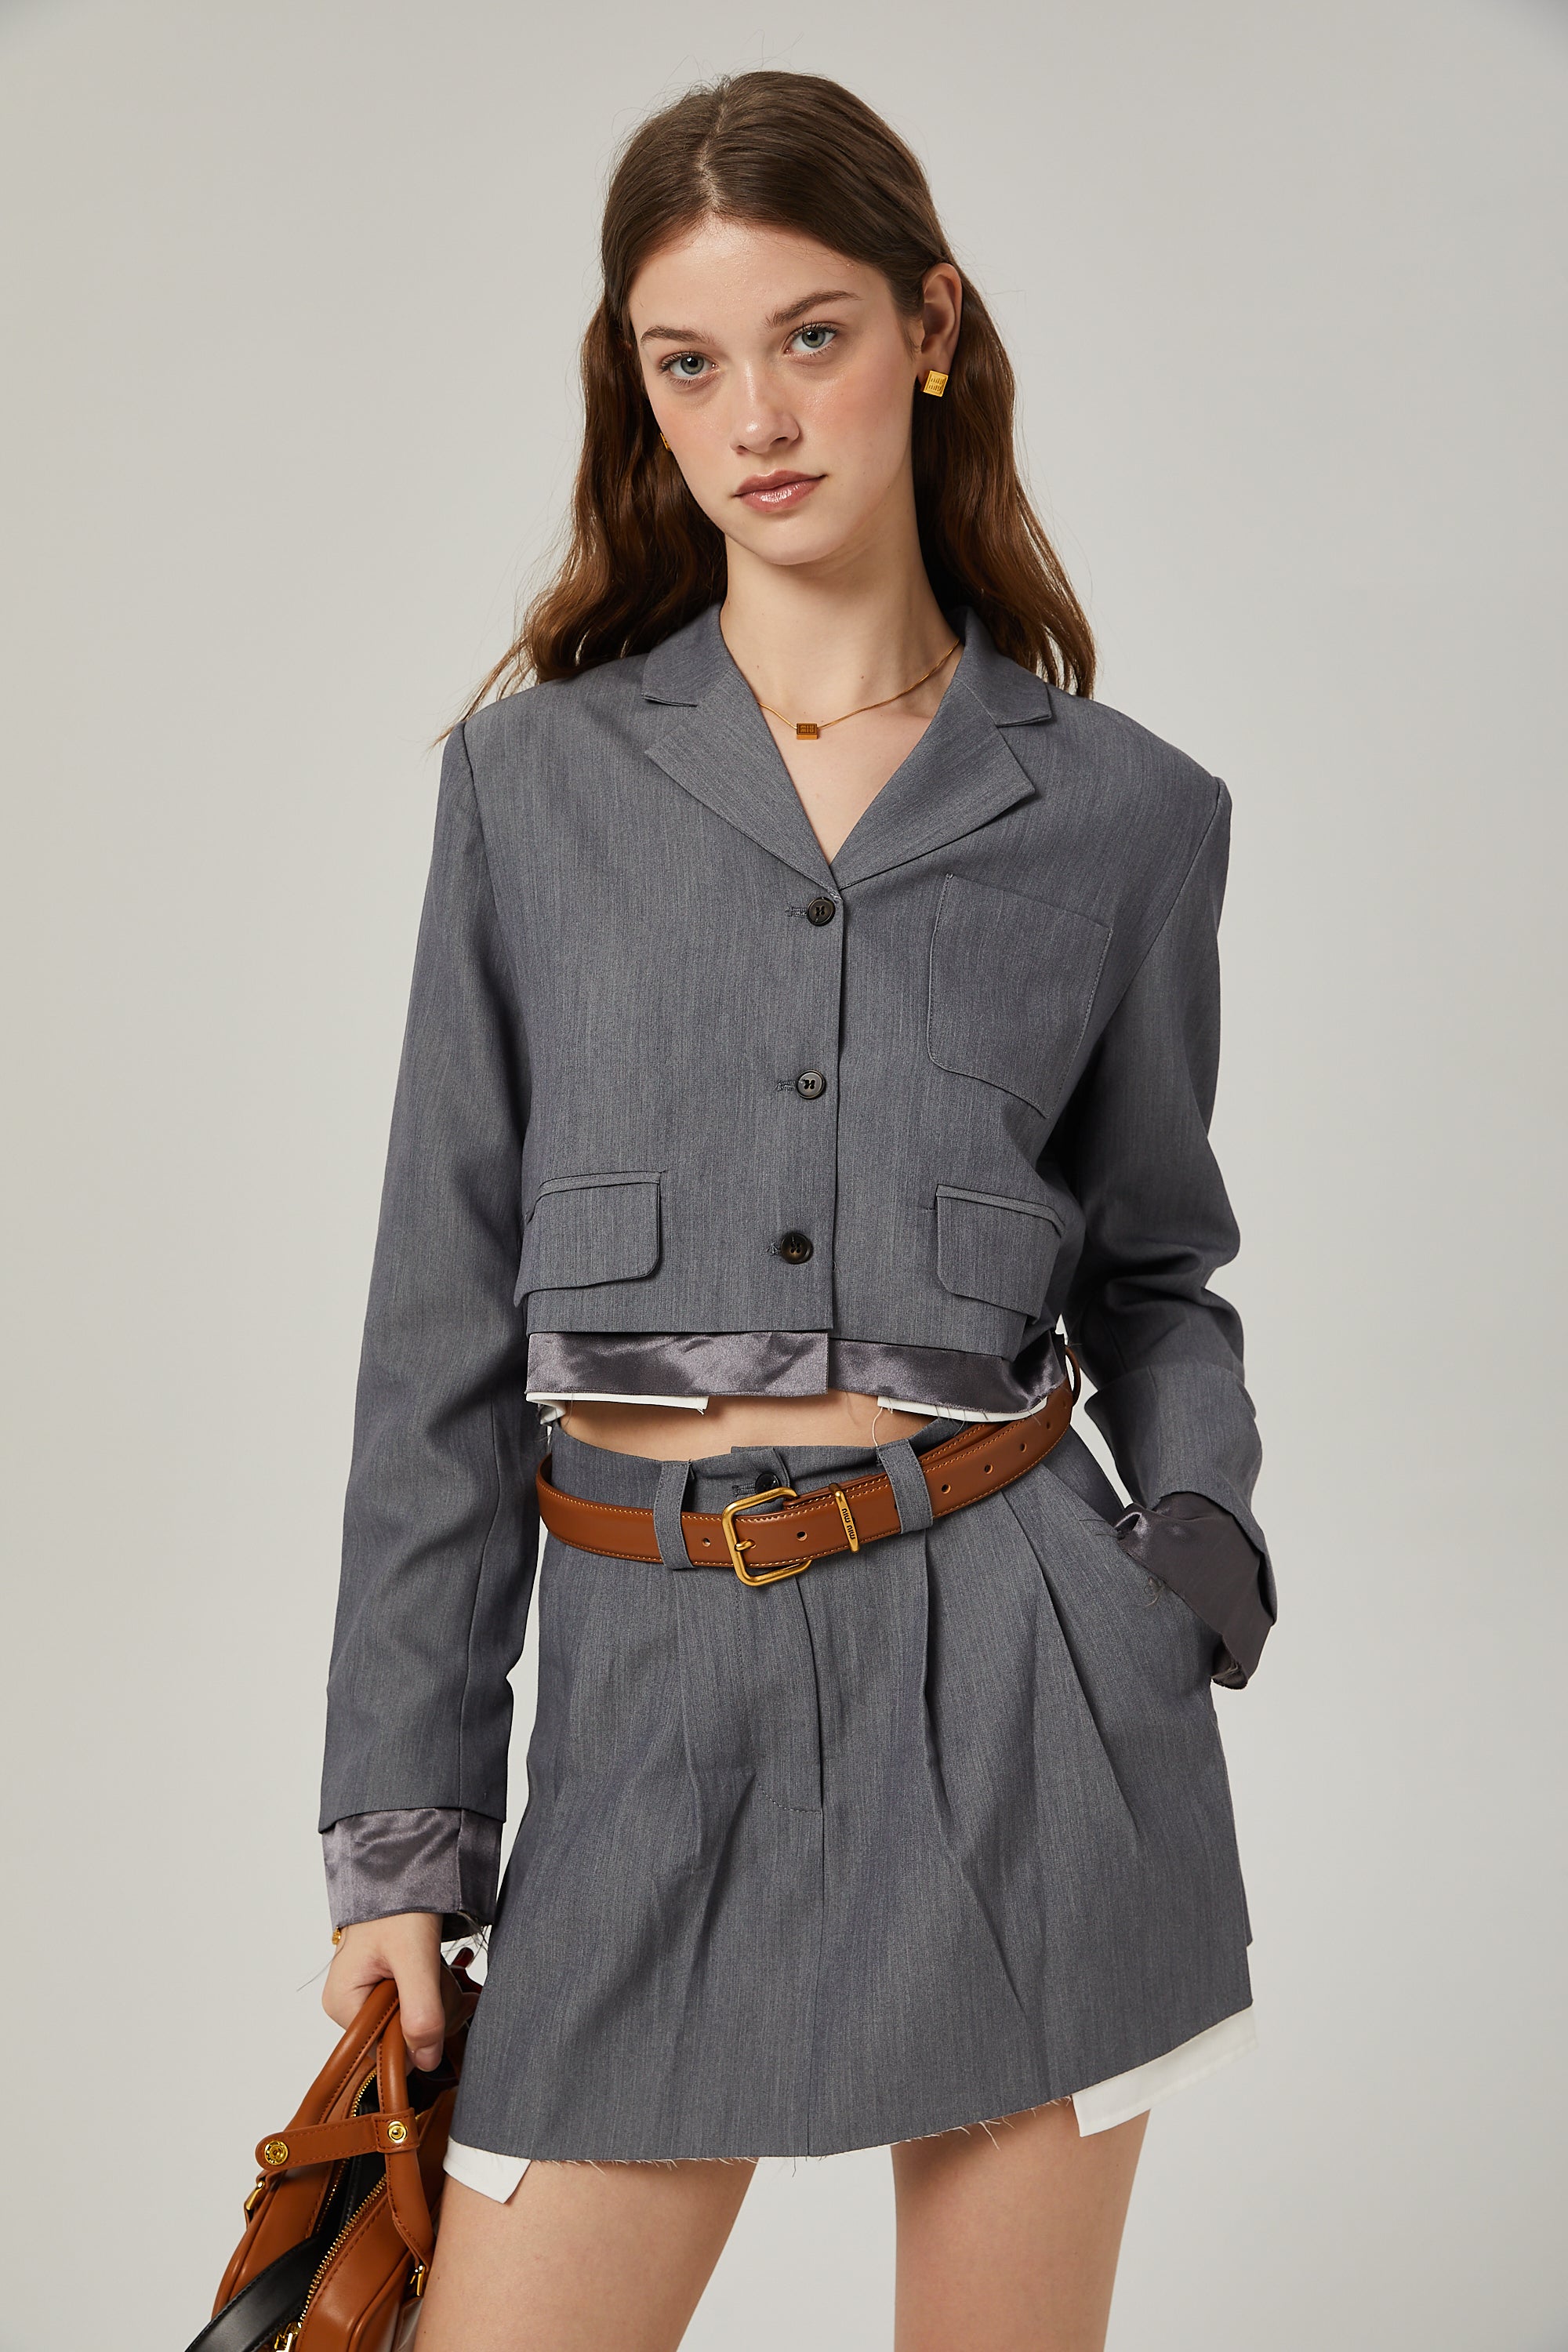 Perrine casual jacket & skirt matching set